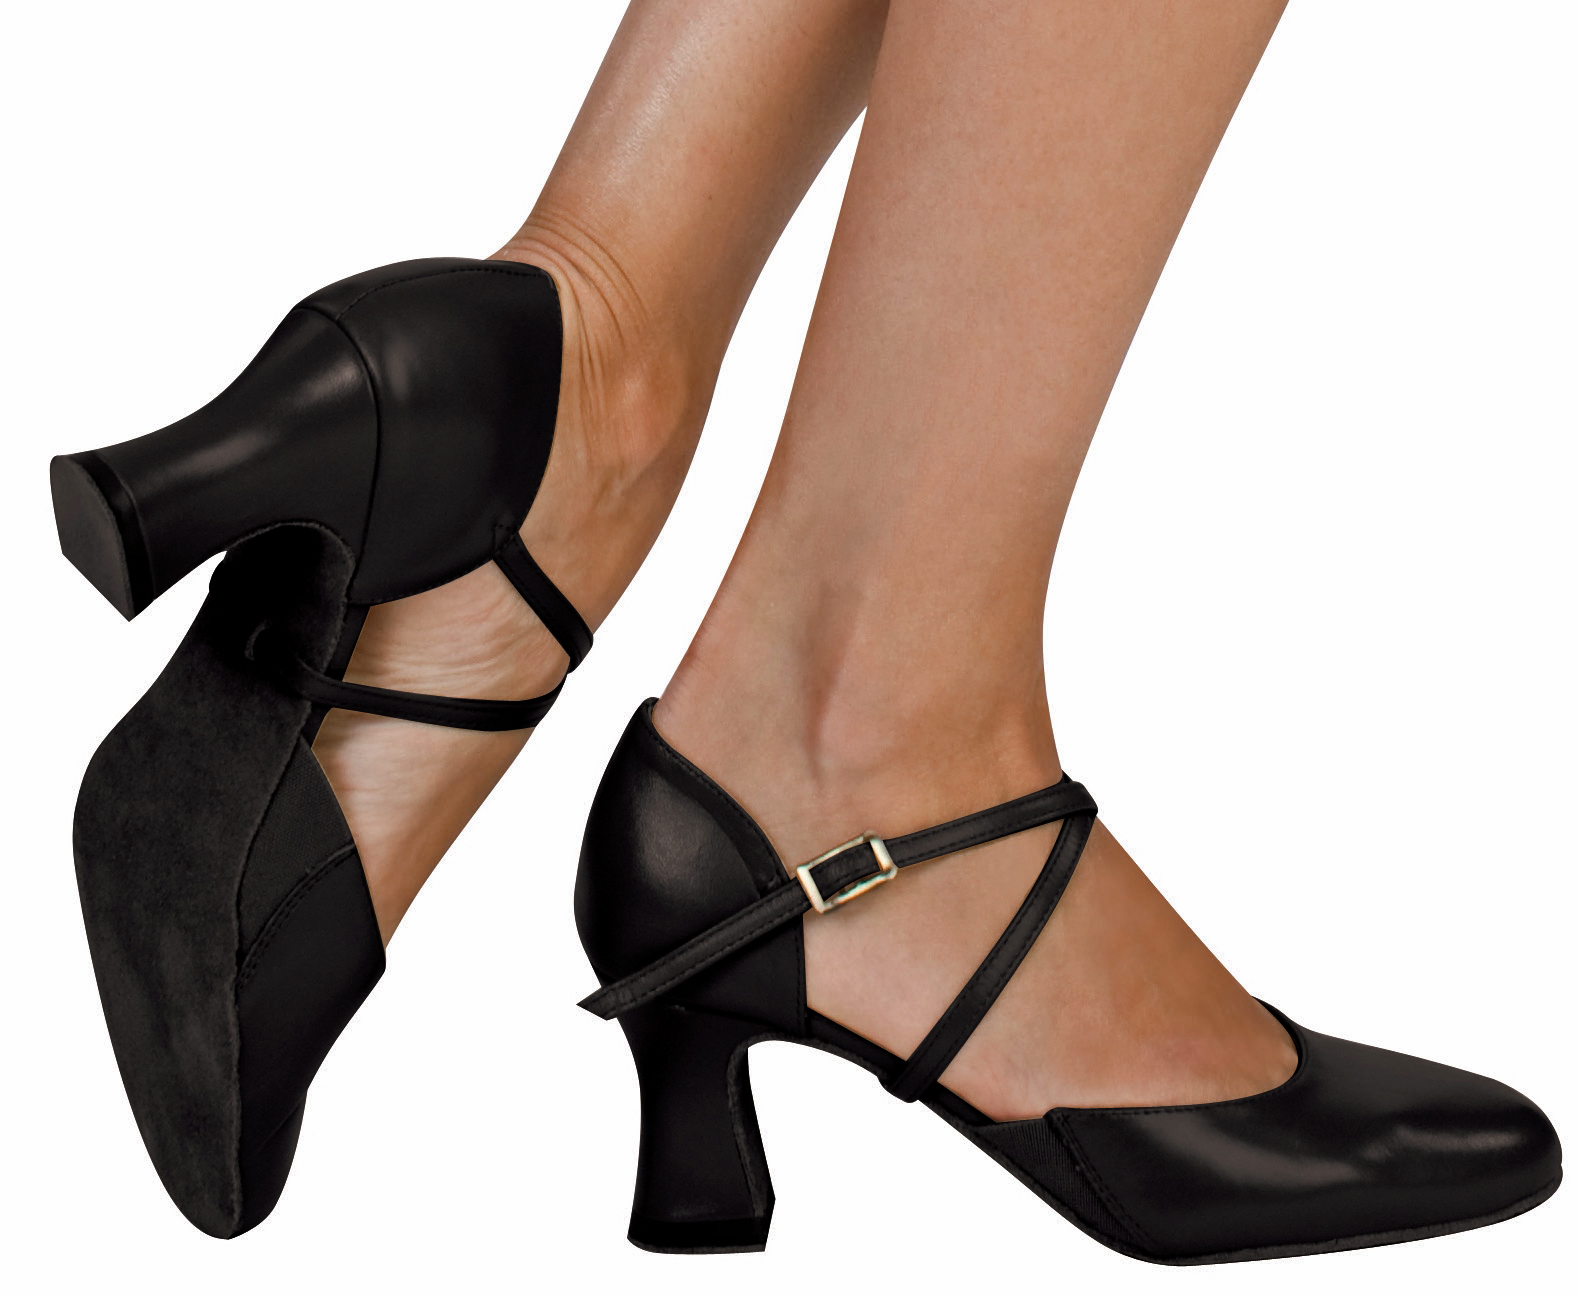 New Angelo Luzio Cabaret Fusion Rita Suede Sole Leather Ballroom Shoes 2" Heel 